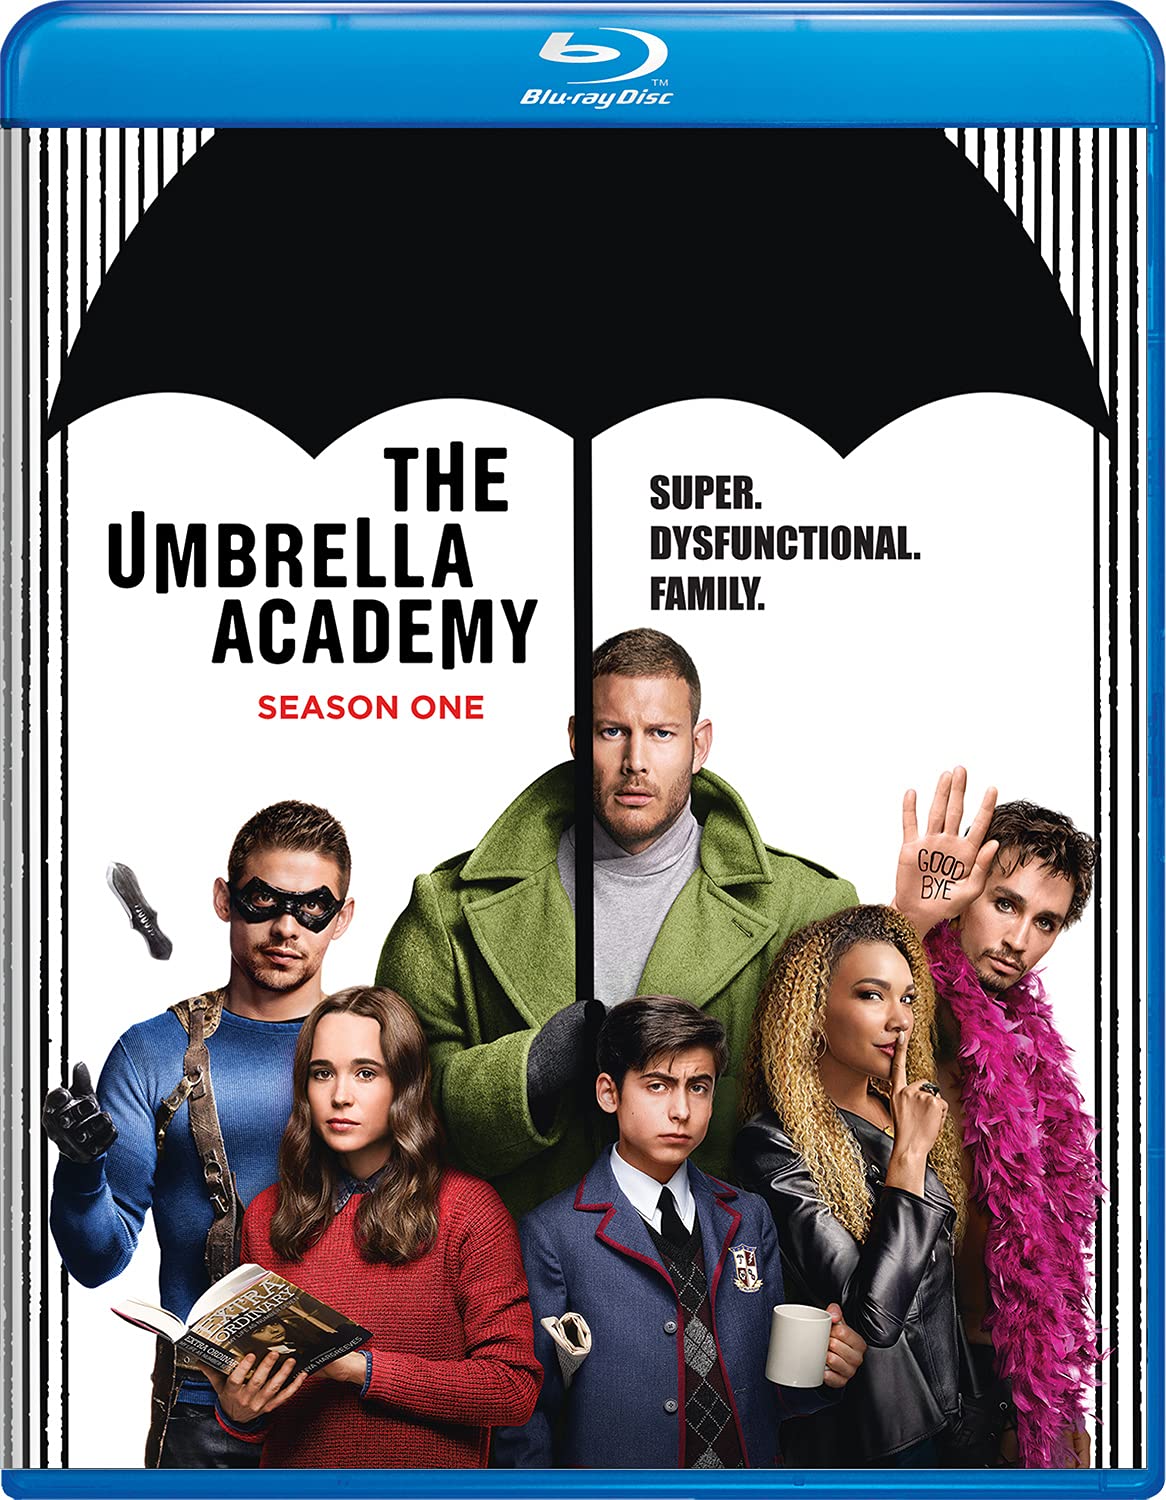 The Umbrella Academy: Season One (Blu-ray) $7.99 + Free Shipping